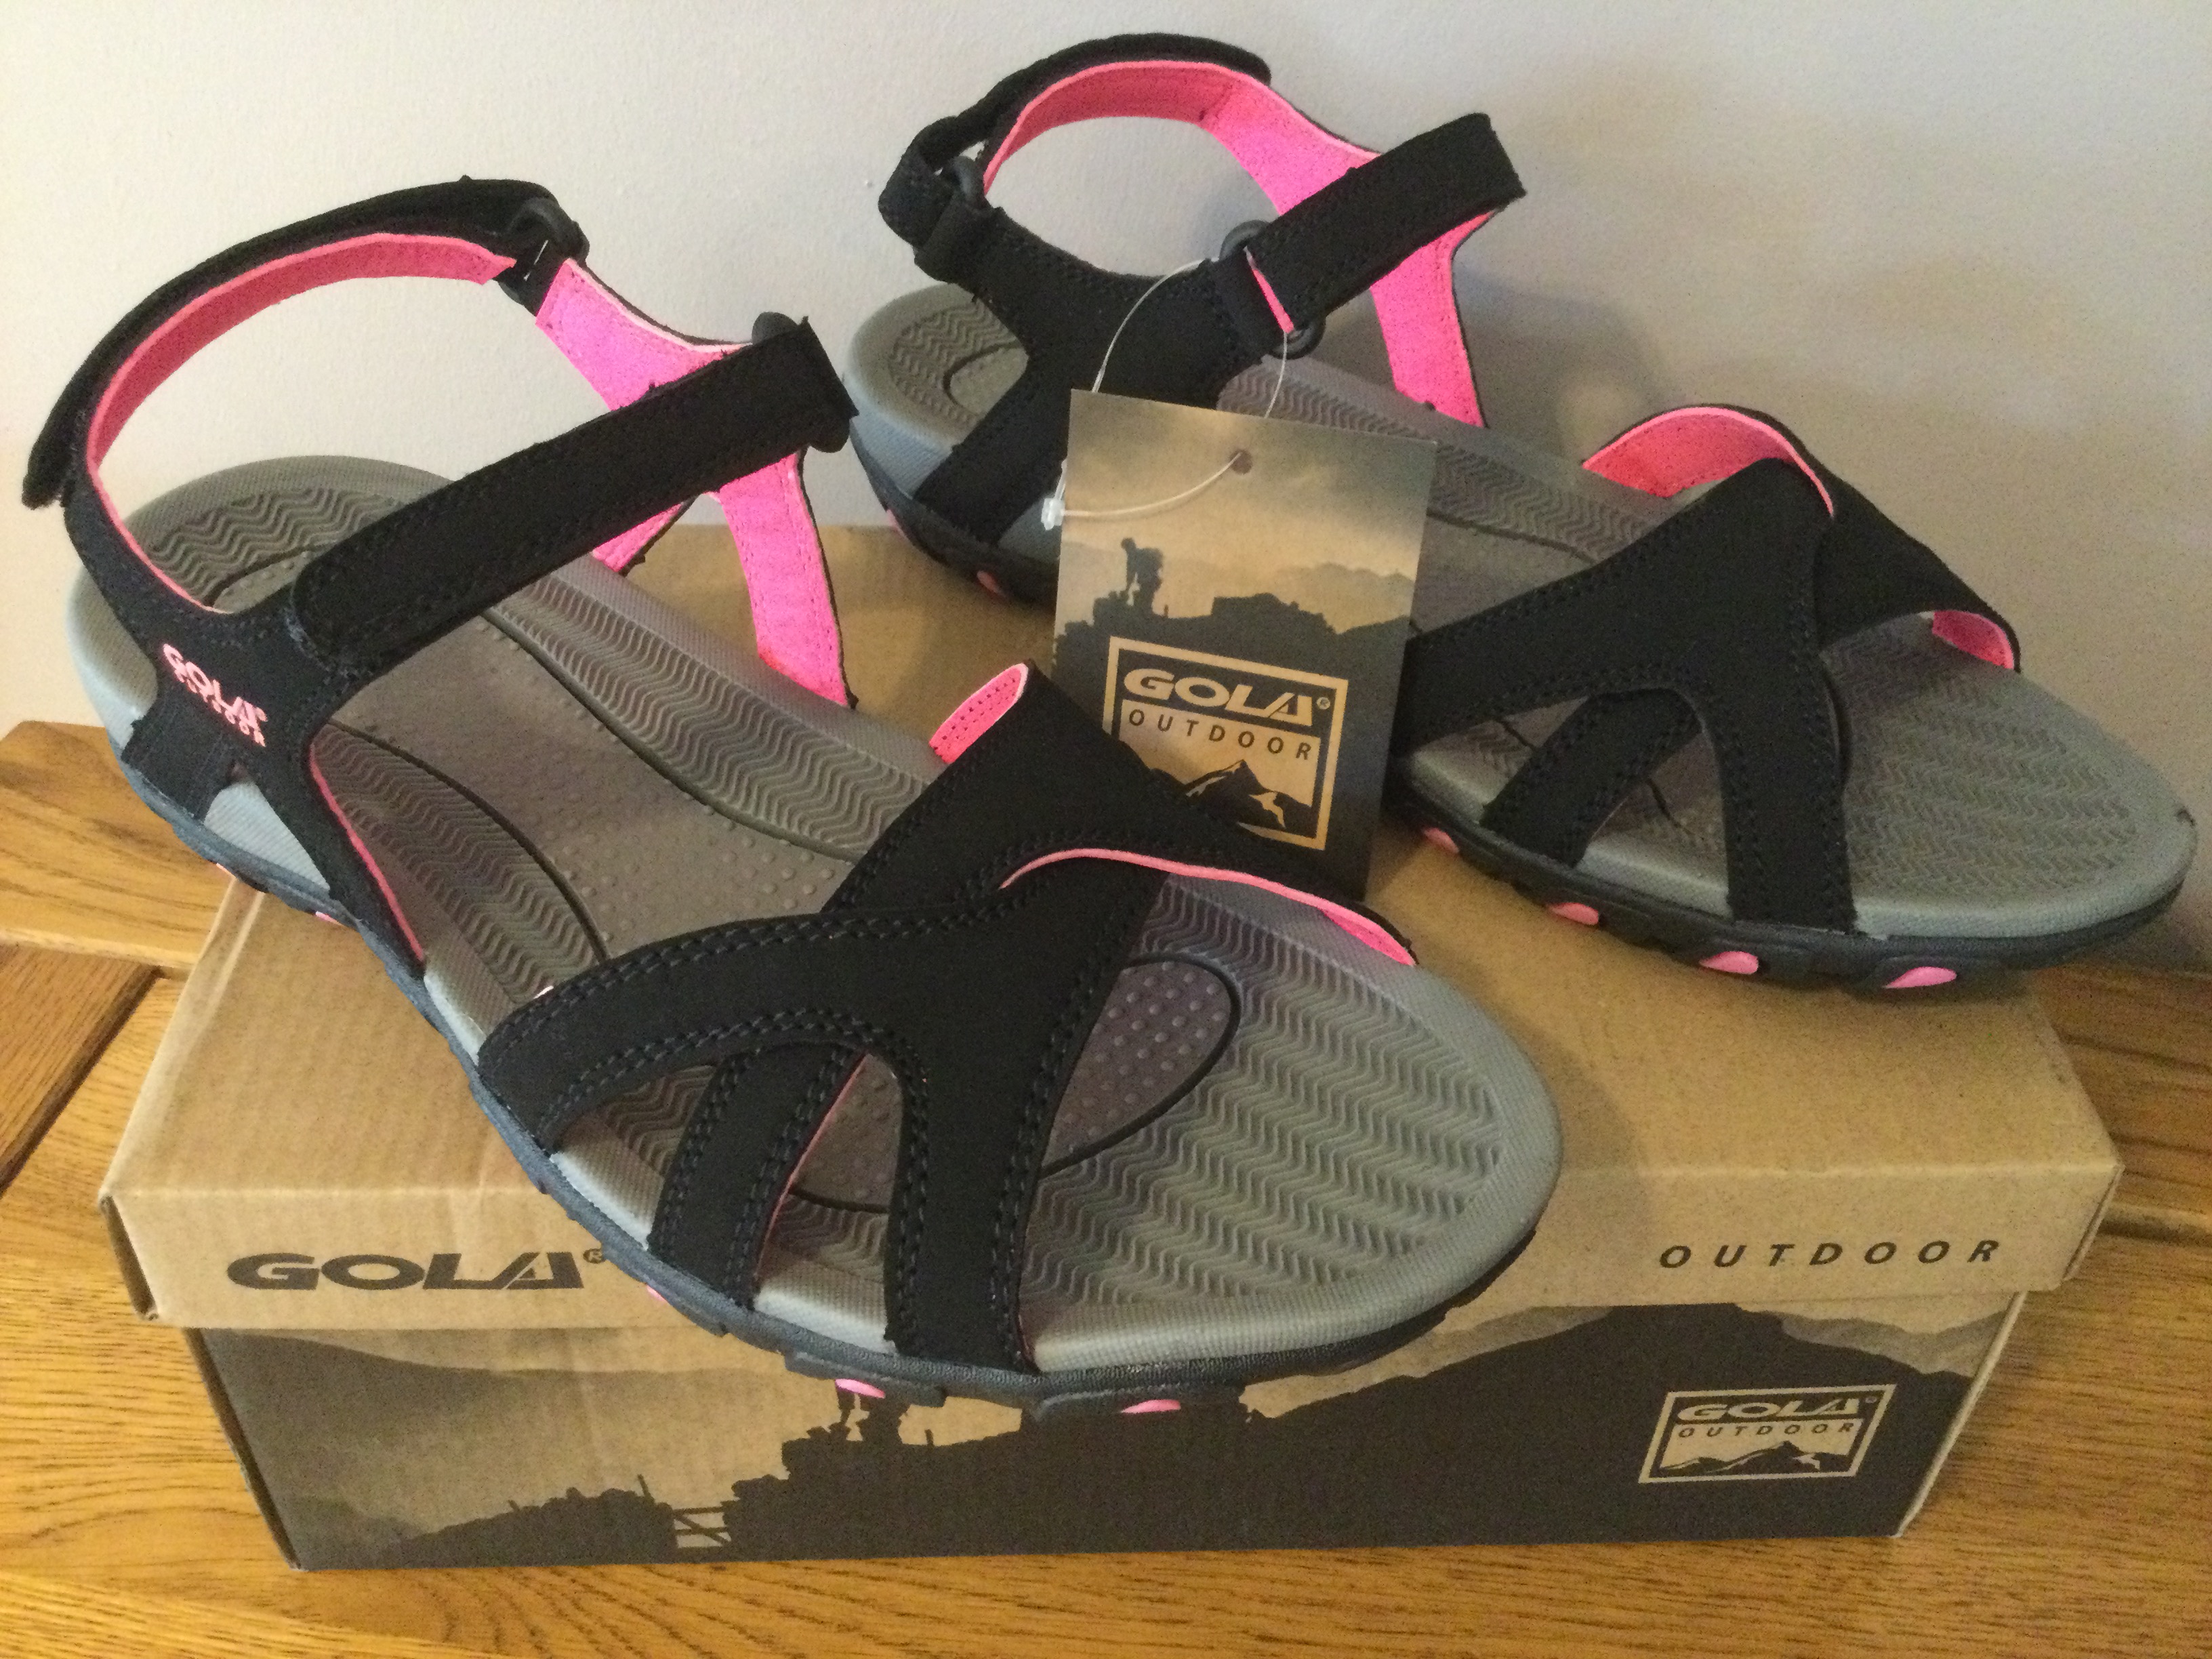 Gola Womens “Cedar” Hiking Sandals, Black/Hot Pink, Size 7 - Brand New